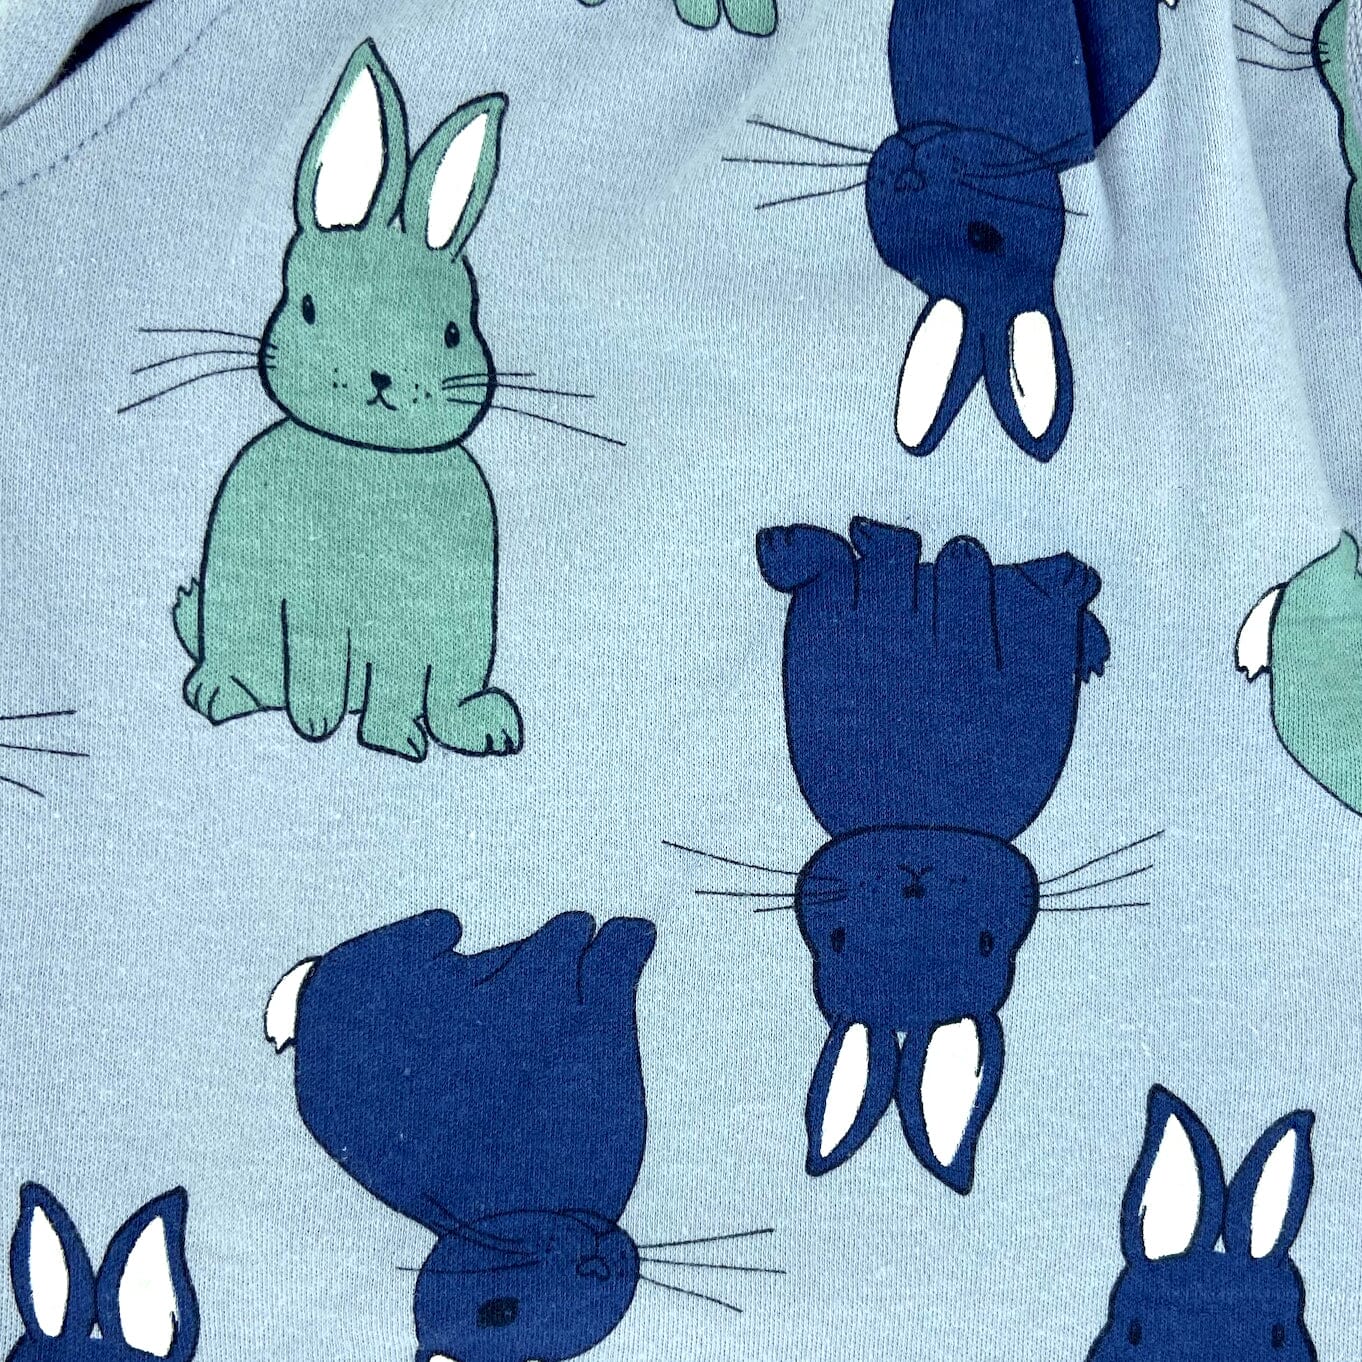 Sleep Shorts for Women Cute Cartoon Rabbit Star Pajama Shorts with Pockets  Womens Pj Bottoms Sleep Pants S at  Women's Clothing store